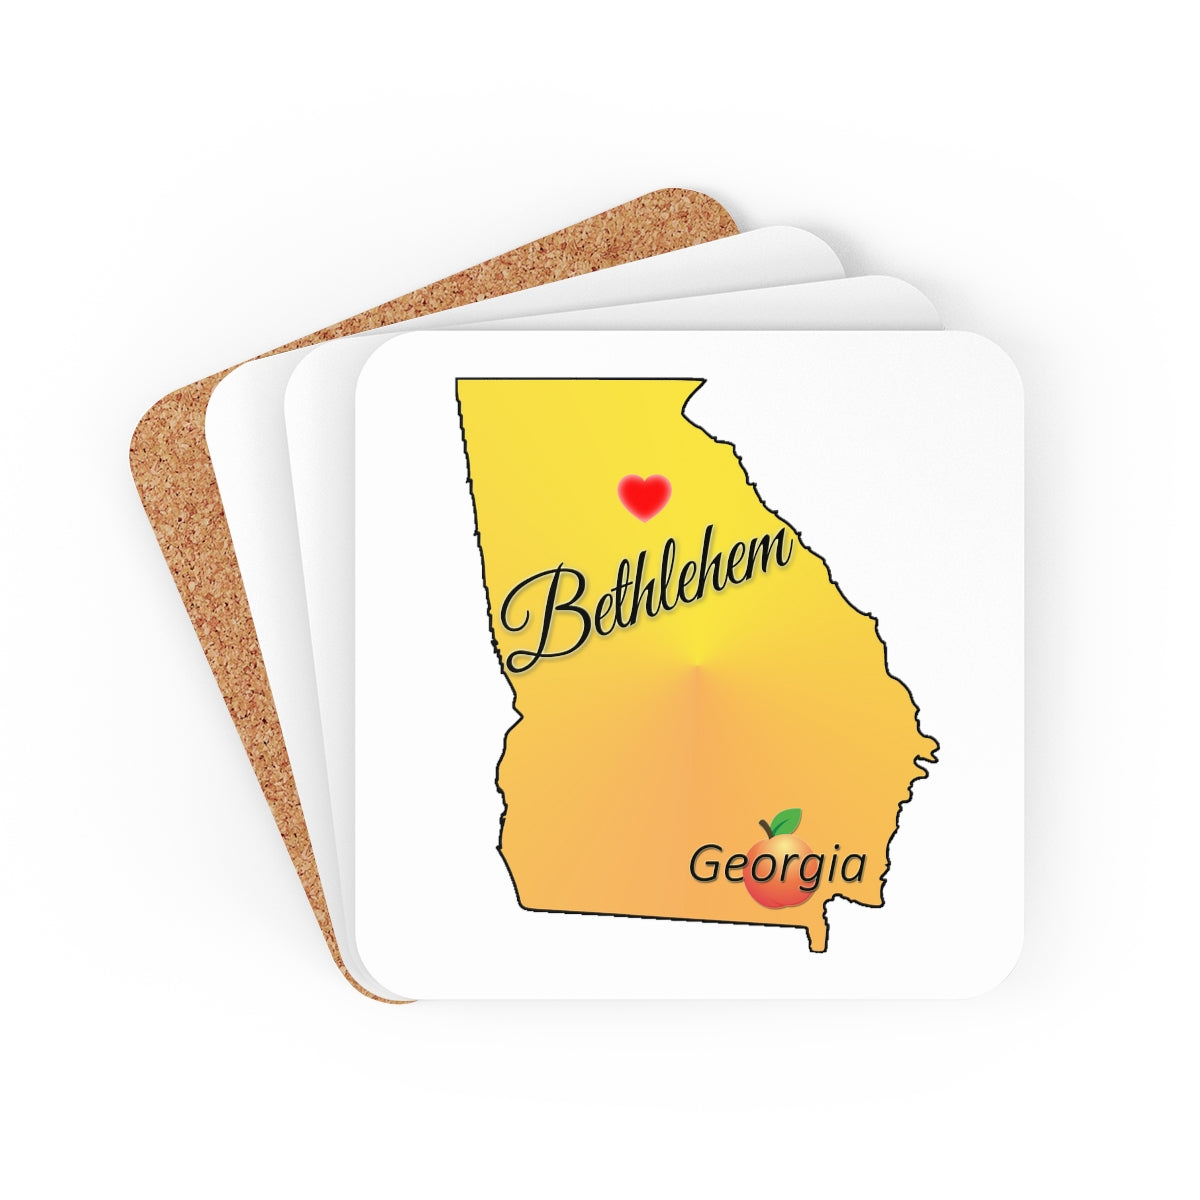 Bethlehem Georgia Corkwood Coaster Set